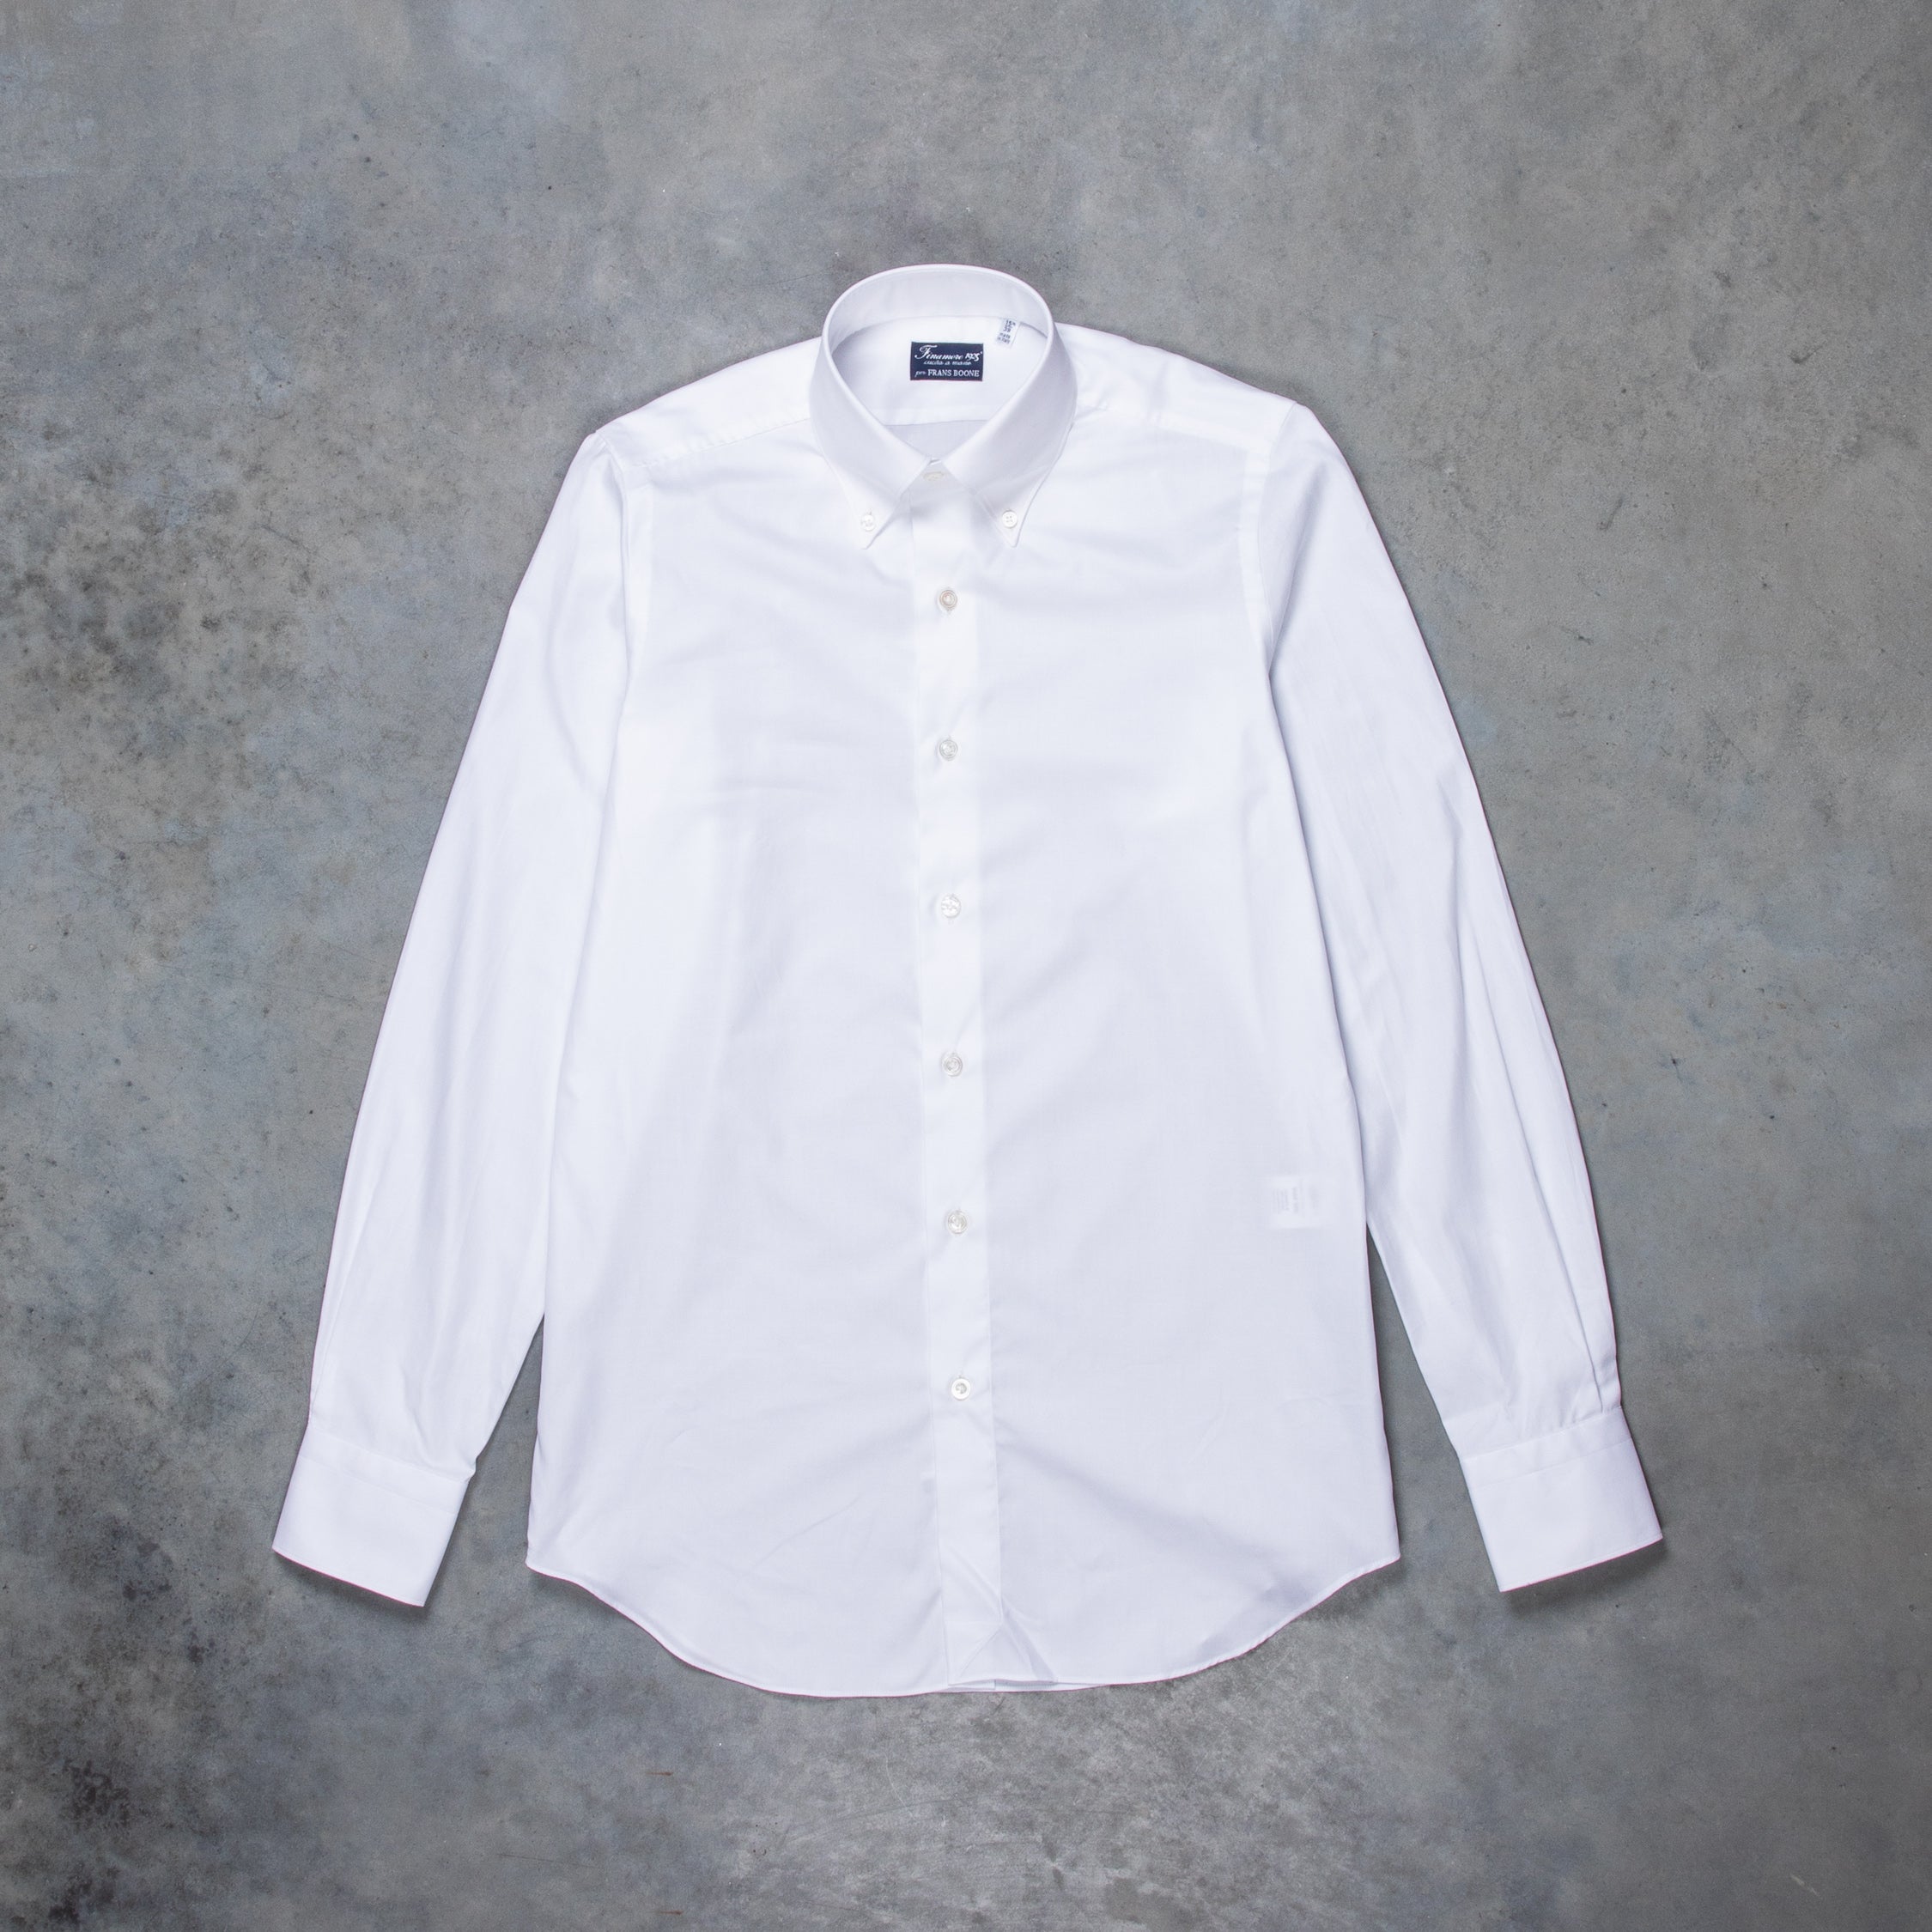 Finamore Milano shirt Collar Lucio Royal Oxford White